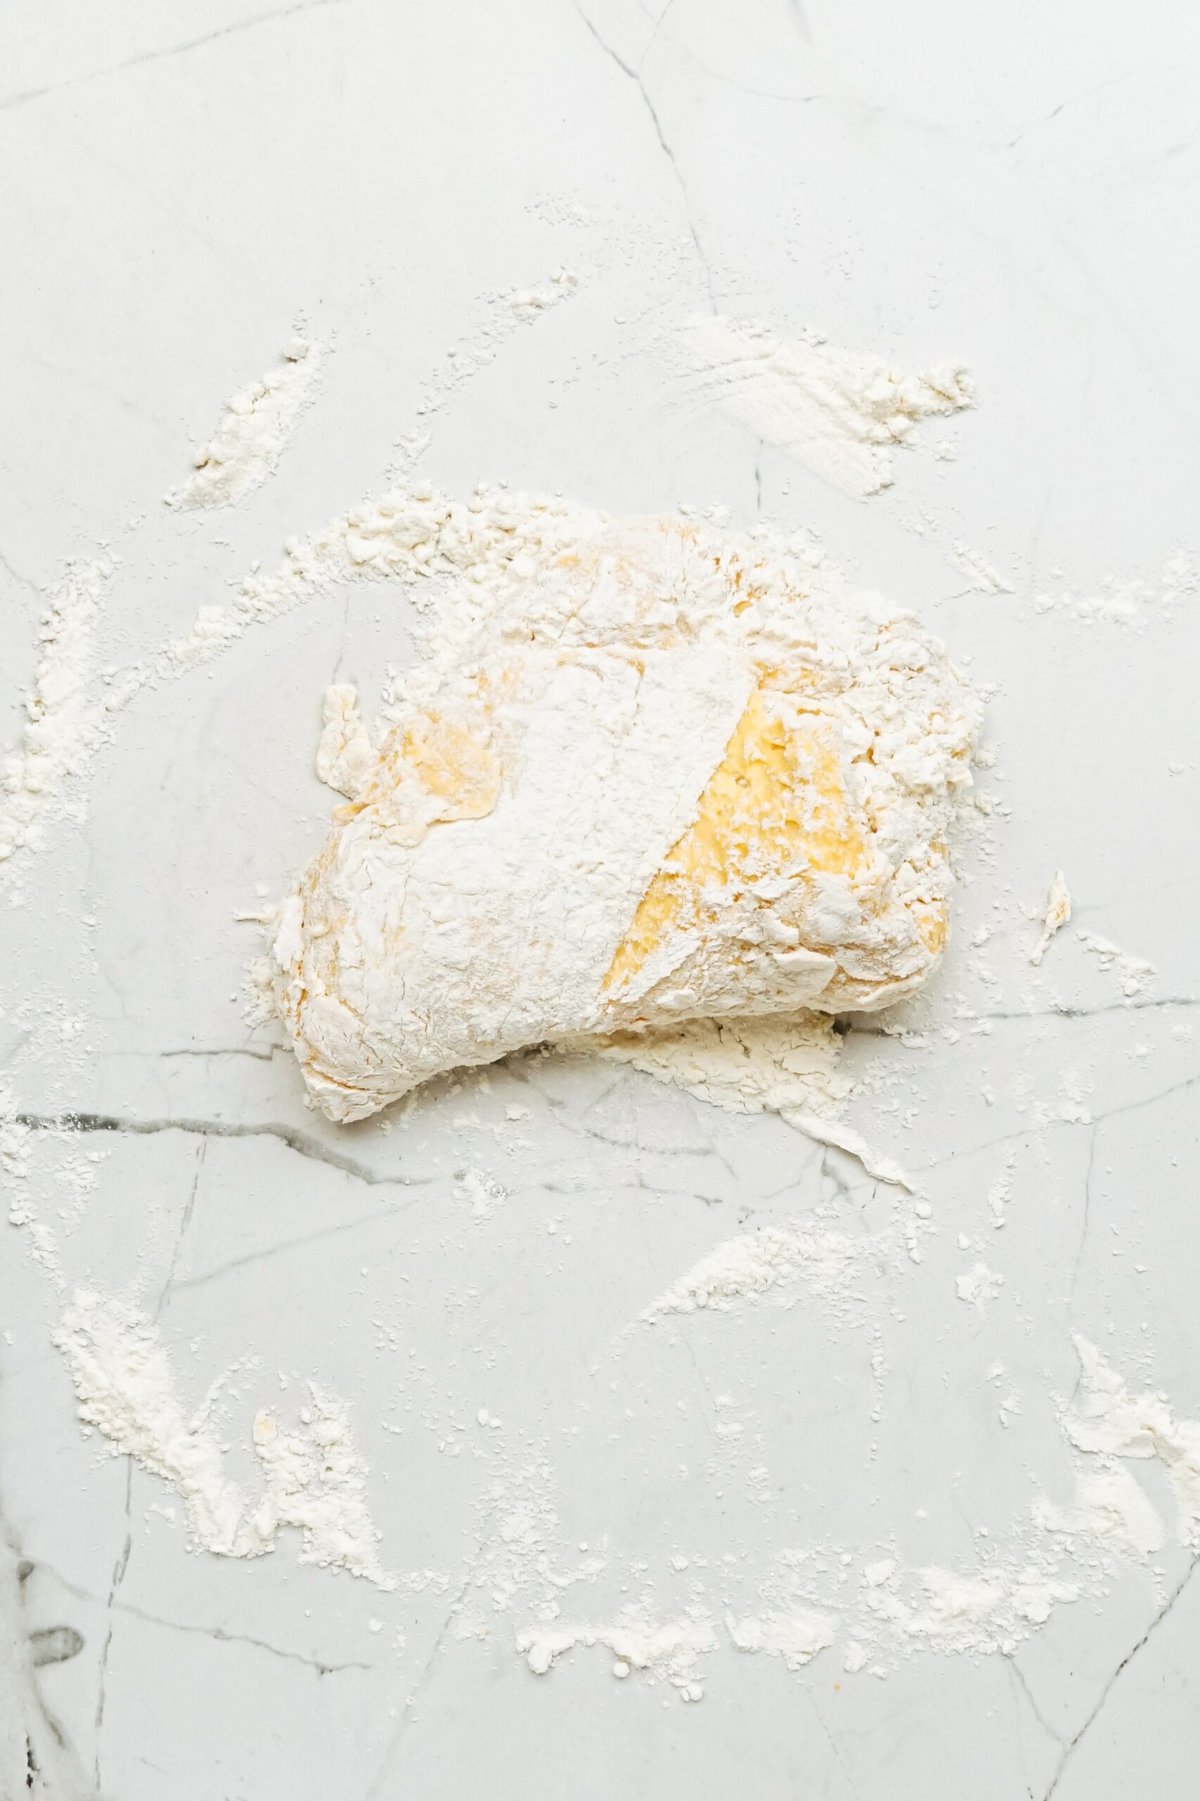 A piece of dough on a marble countertop.